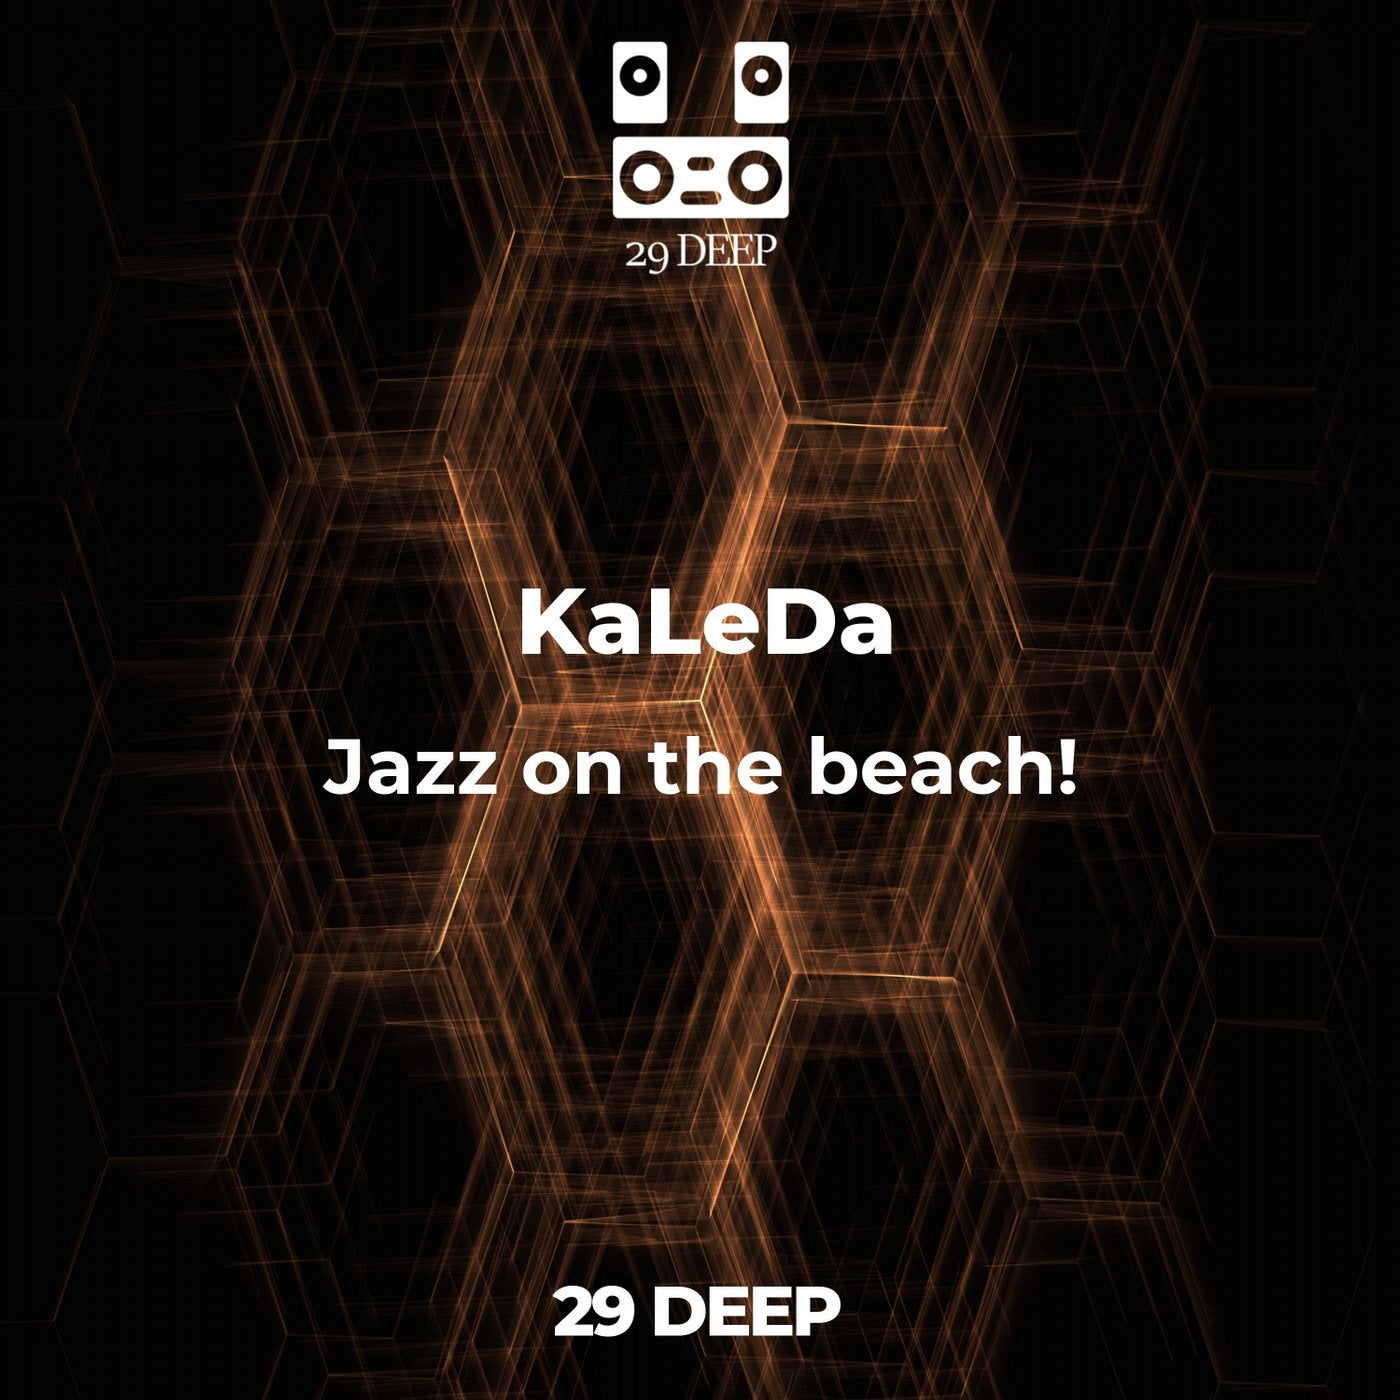 Jazz on the beach!